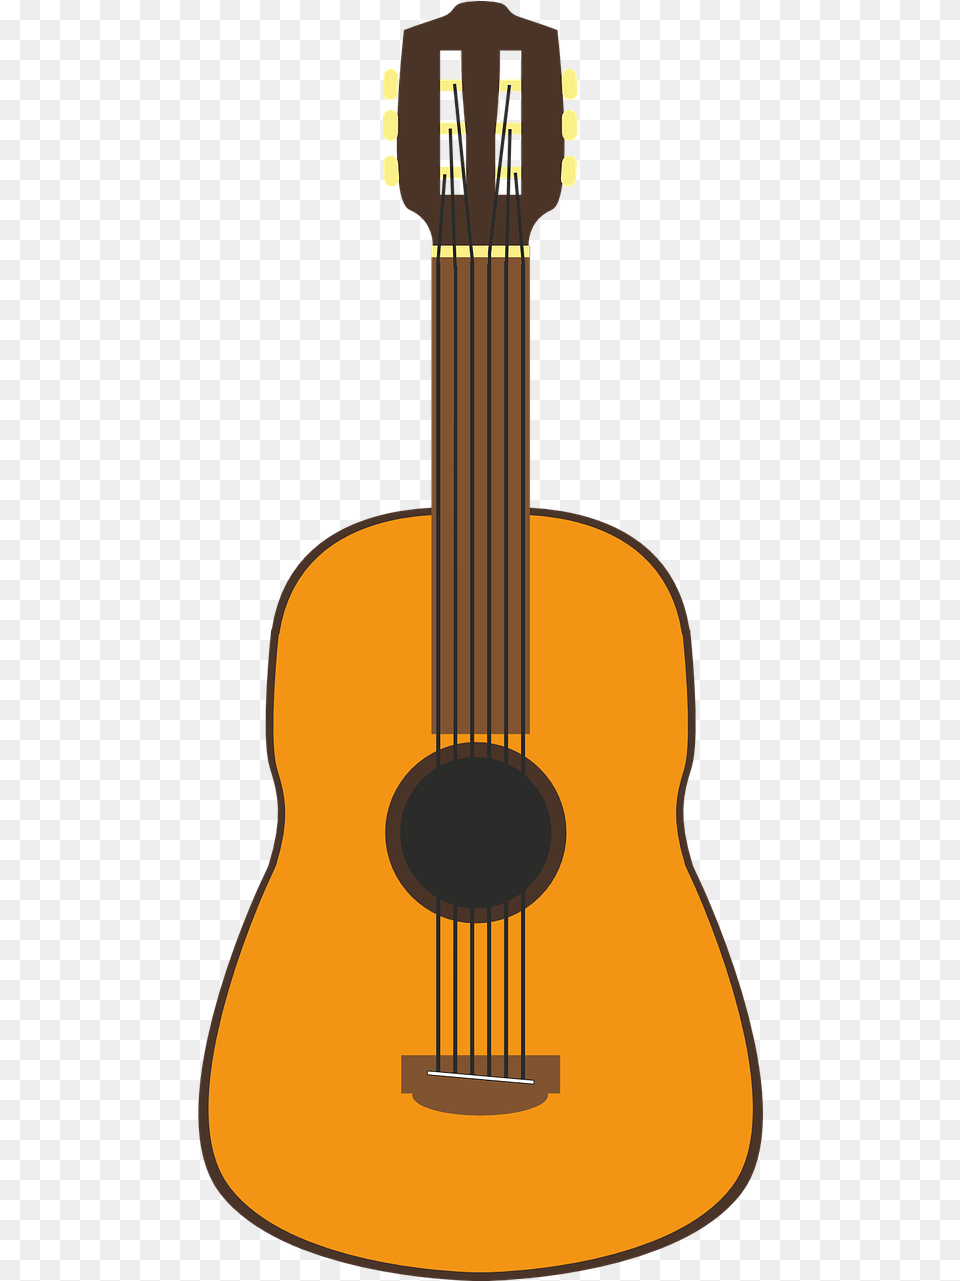 Guitar Vector Music Strings Image Acoustic Guitar, Musical Instrument Free Transparent Png